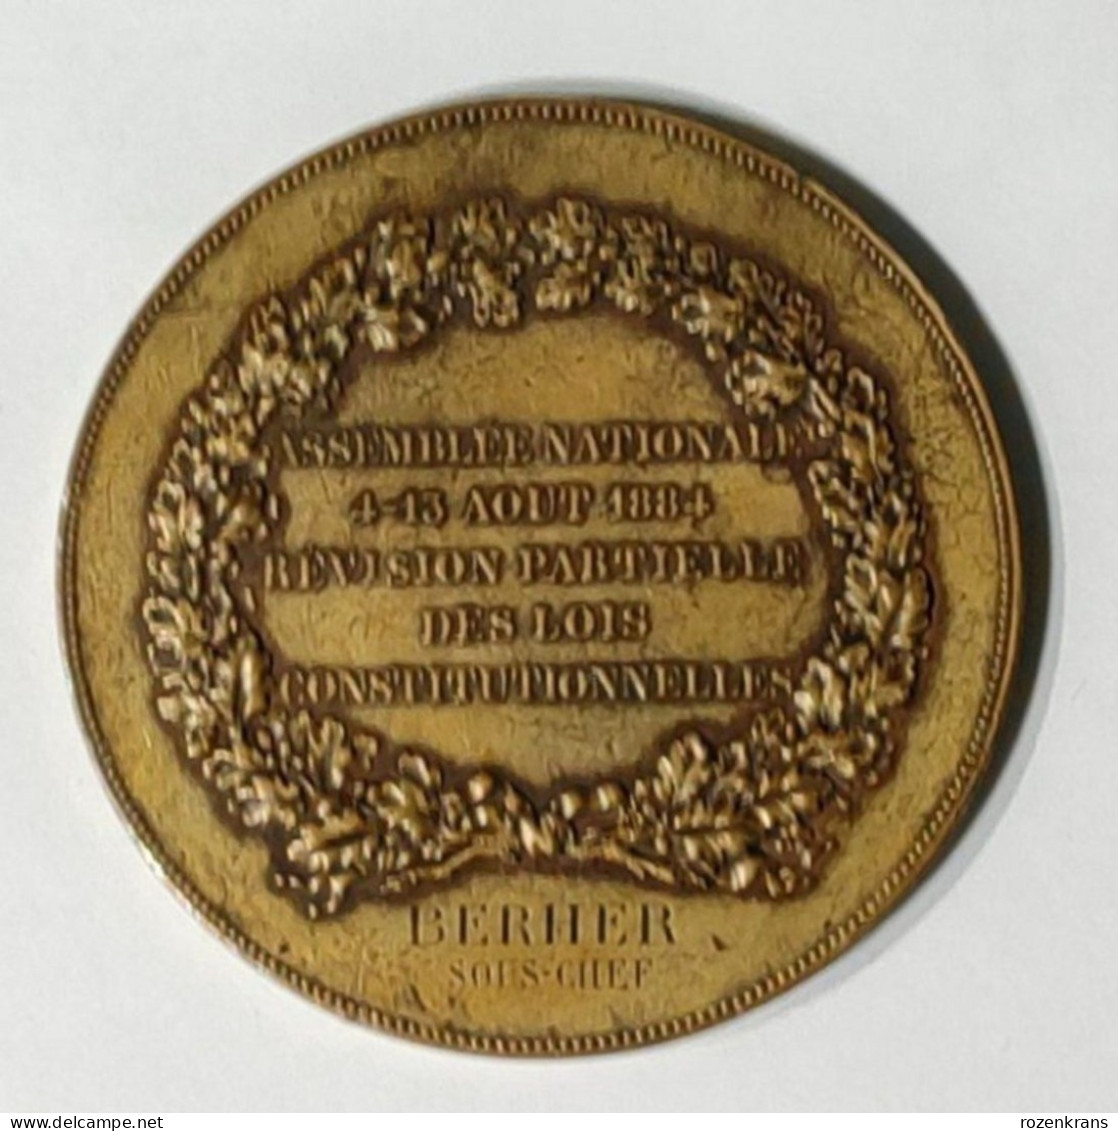 Medaille Ancienne Assemblee Nationale Gravee Chaplain 1884 Revision Des Lois Behrer Sous-Chef Munt Old Medal Oude - Adel